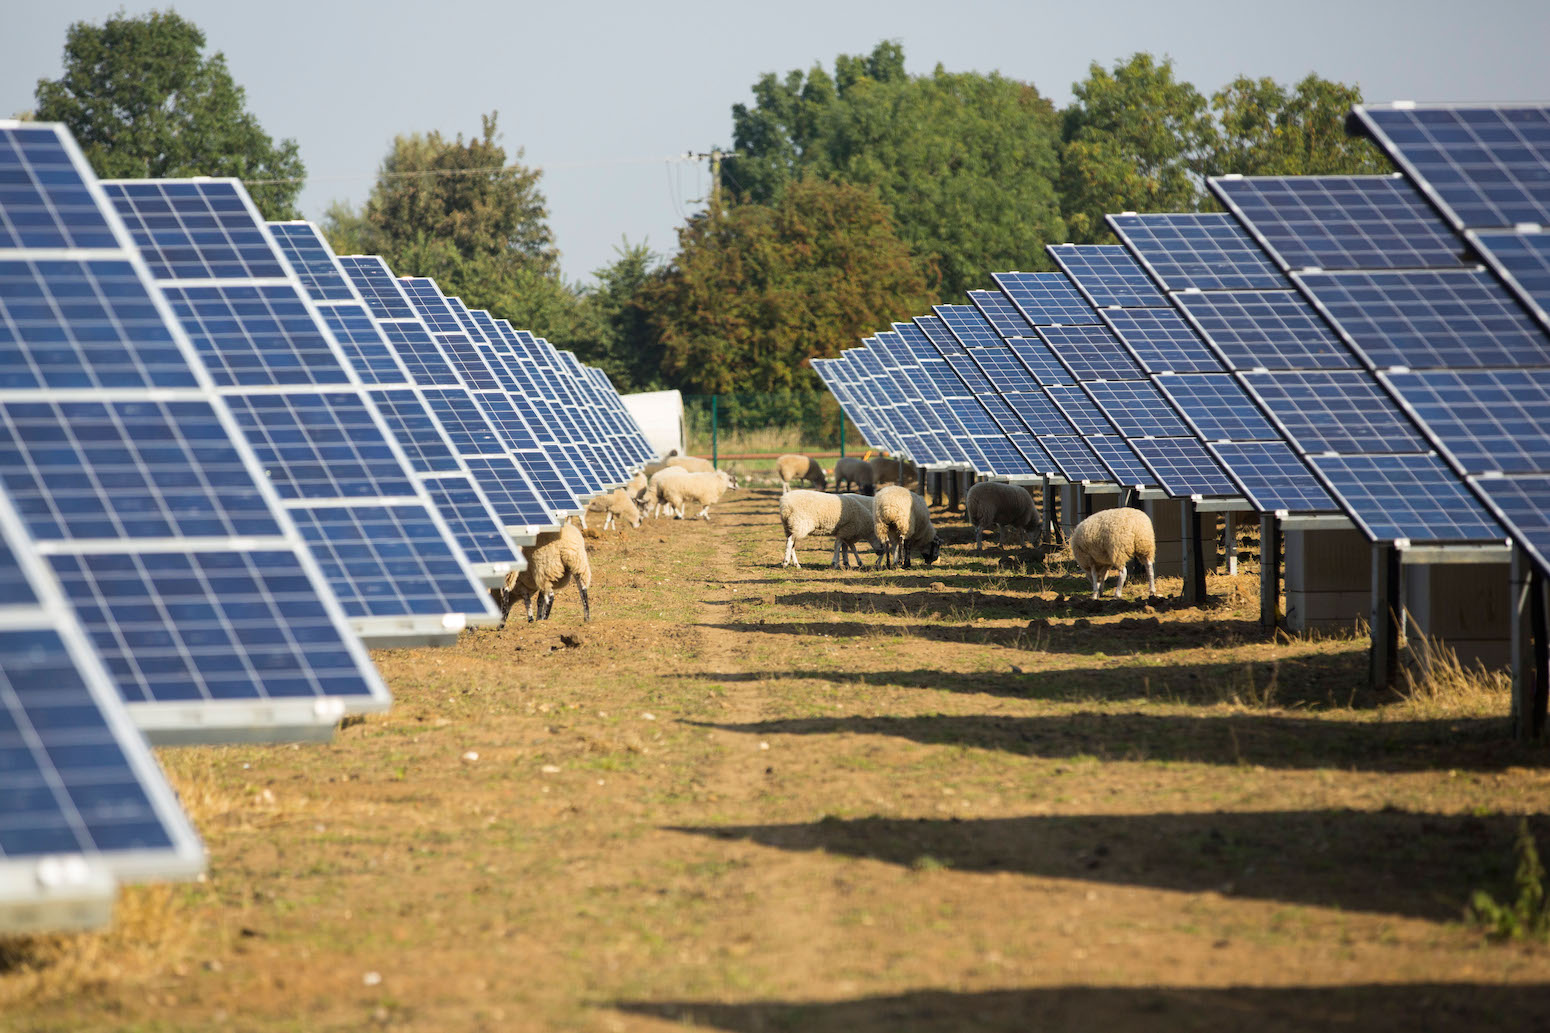 Factcheck: Is solar power a ‘threat’ to UK farmland? - Carbon Brief